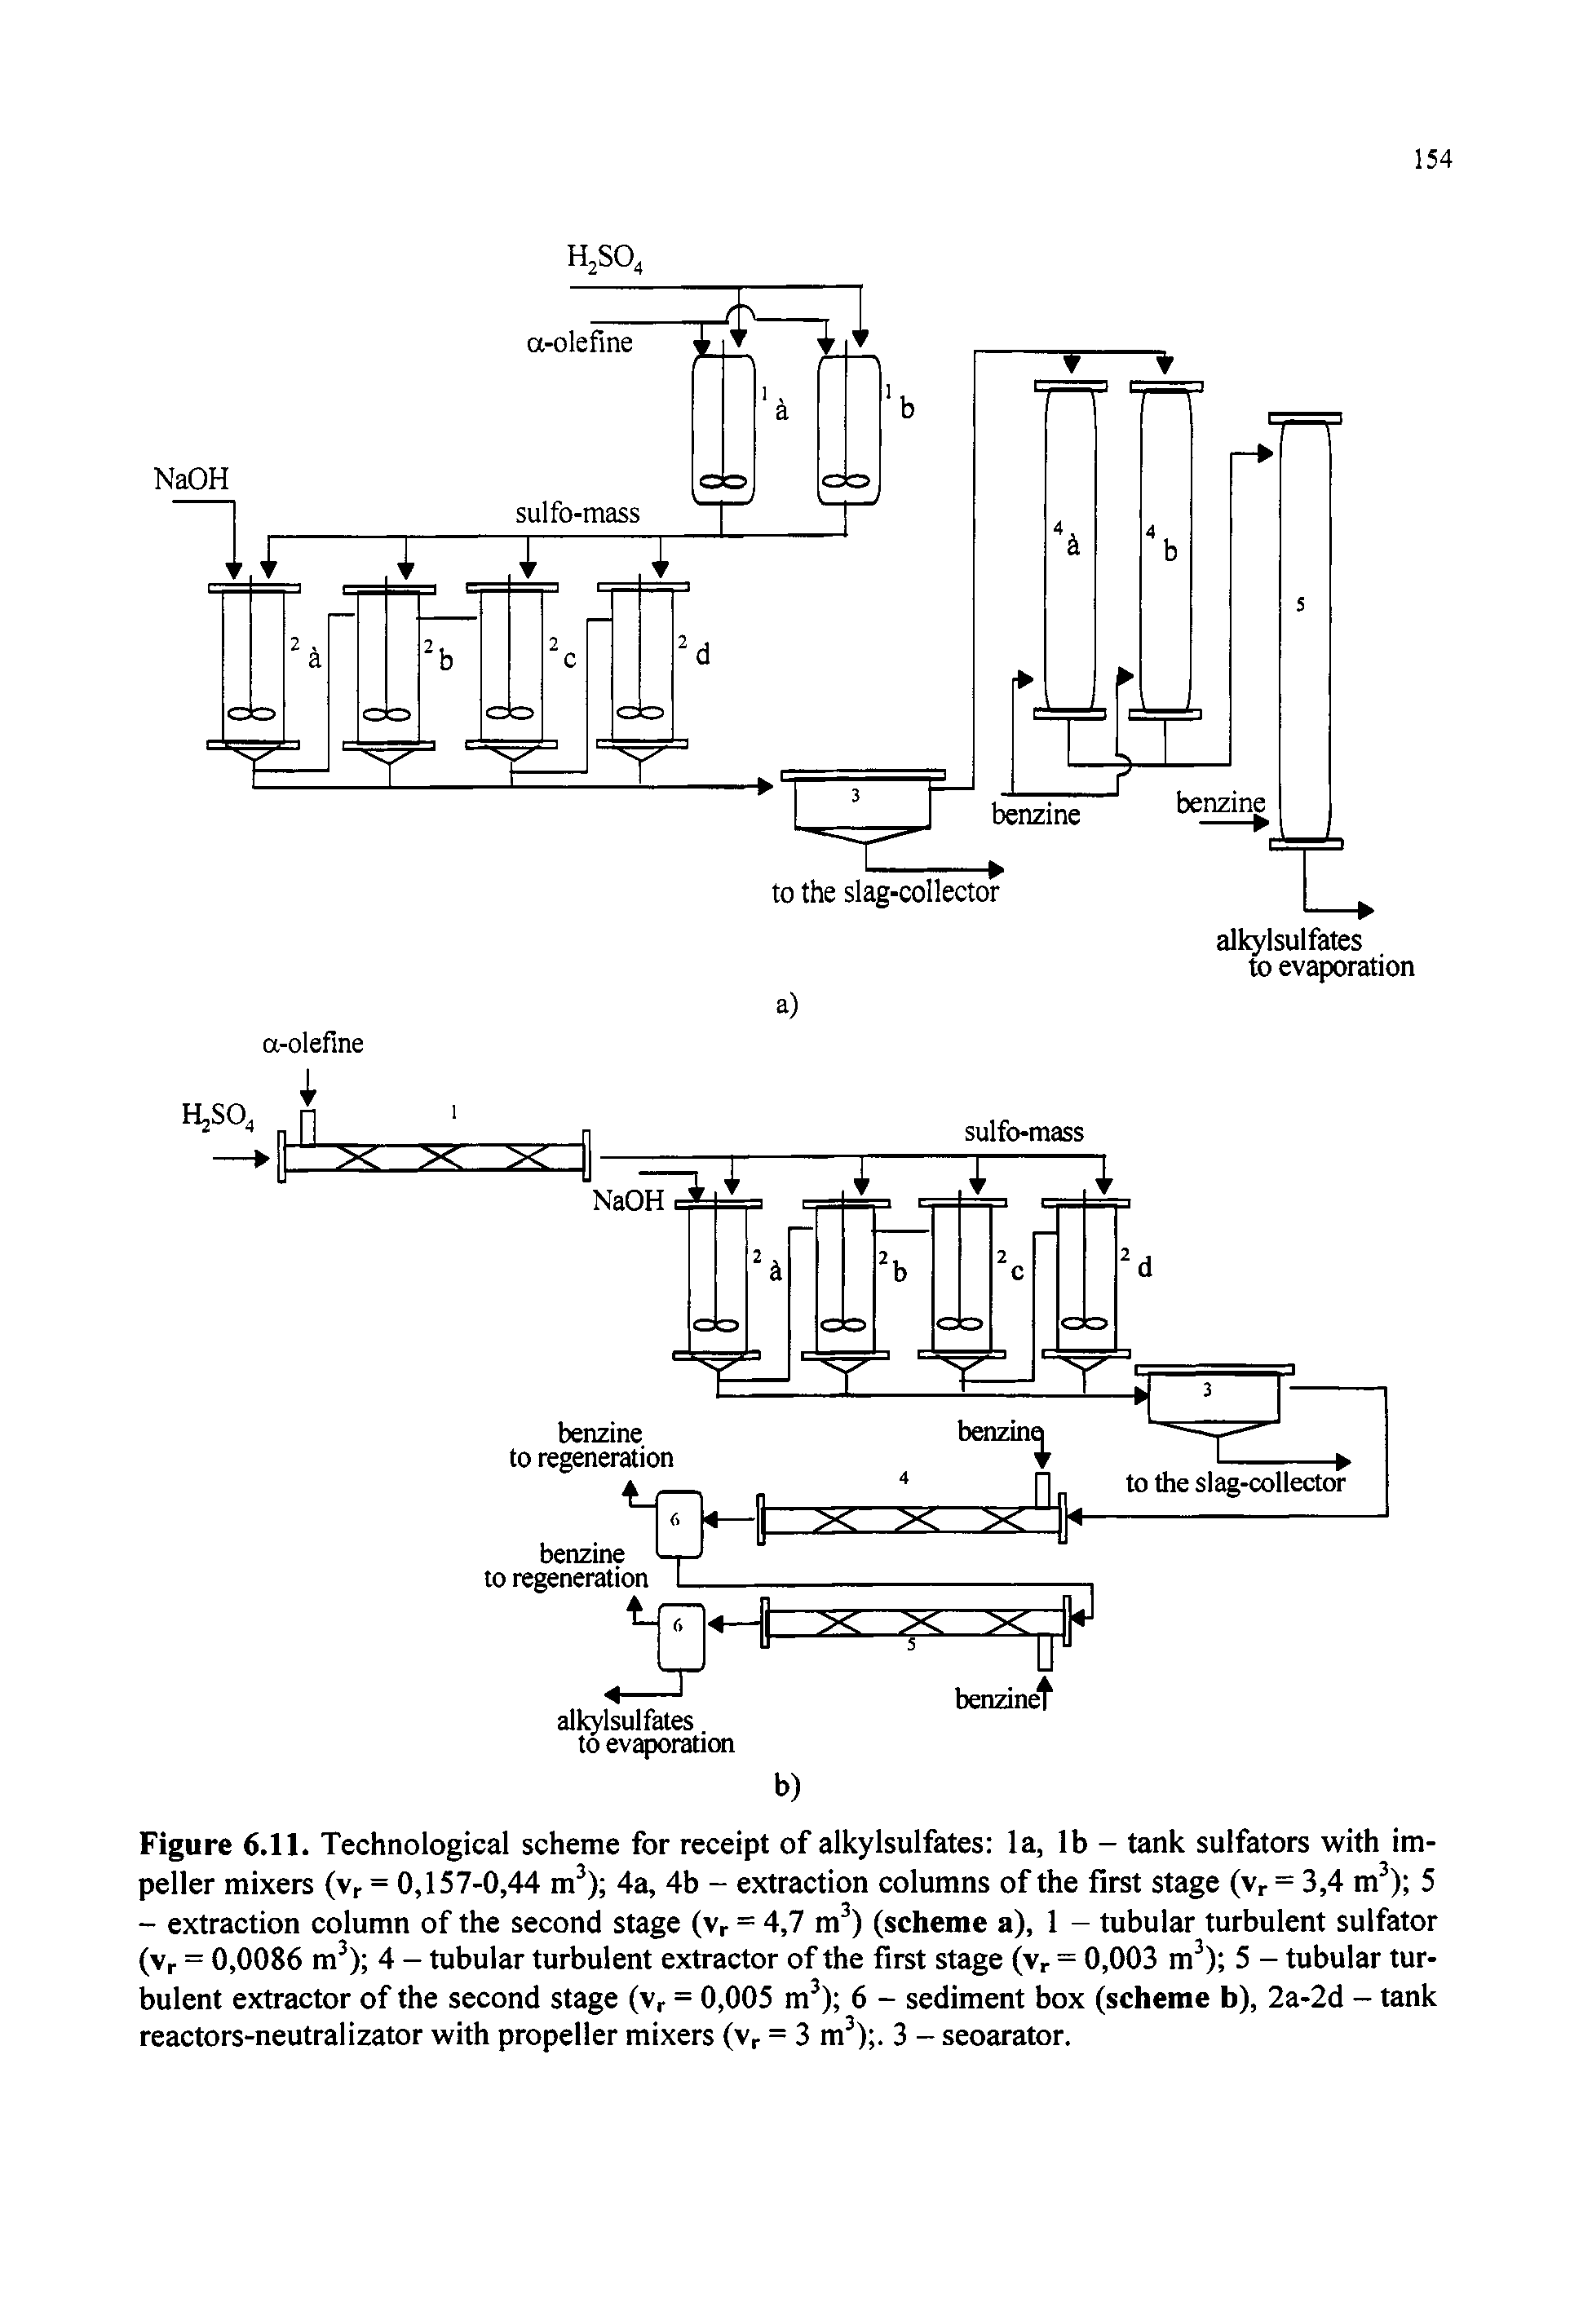 Figure 6.11. Technological scheme for receipt of alkylsulfates la, lb - tank sulfators with impeller mixers (vr = 0,157-0,44 m ) 4a, 4b - extraction columns of the first stage (Vr = 3,4 m ) 5 - extraction column of the second stage (Vr = 4,7 m ) (scheme a), 1 - tubular turbulent sulfator (Vr = 0,0086 m ) 4 - tubular turbulent extractor of the first stage (vr = 0,003 m ) 5 - tubular turbulent extractor of the second stage (Vr = 0,005 m ) 6 - sediment box (scheme b), 2a-2d - tank reactors-neutralizator with propeller mixers (Vr = 3 m ) . 3 - seoarator.